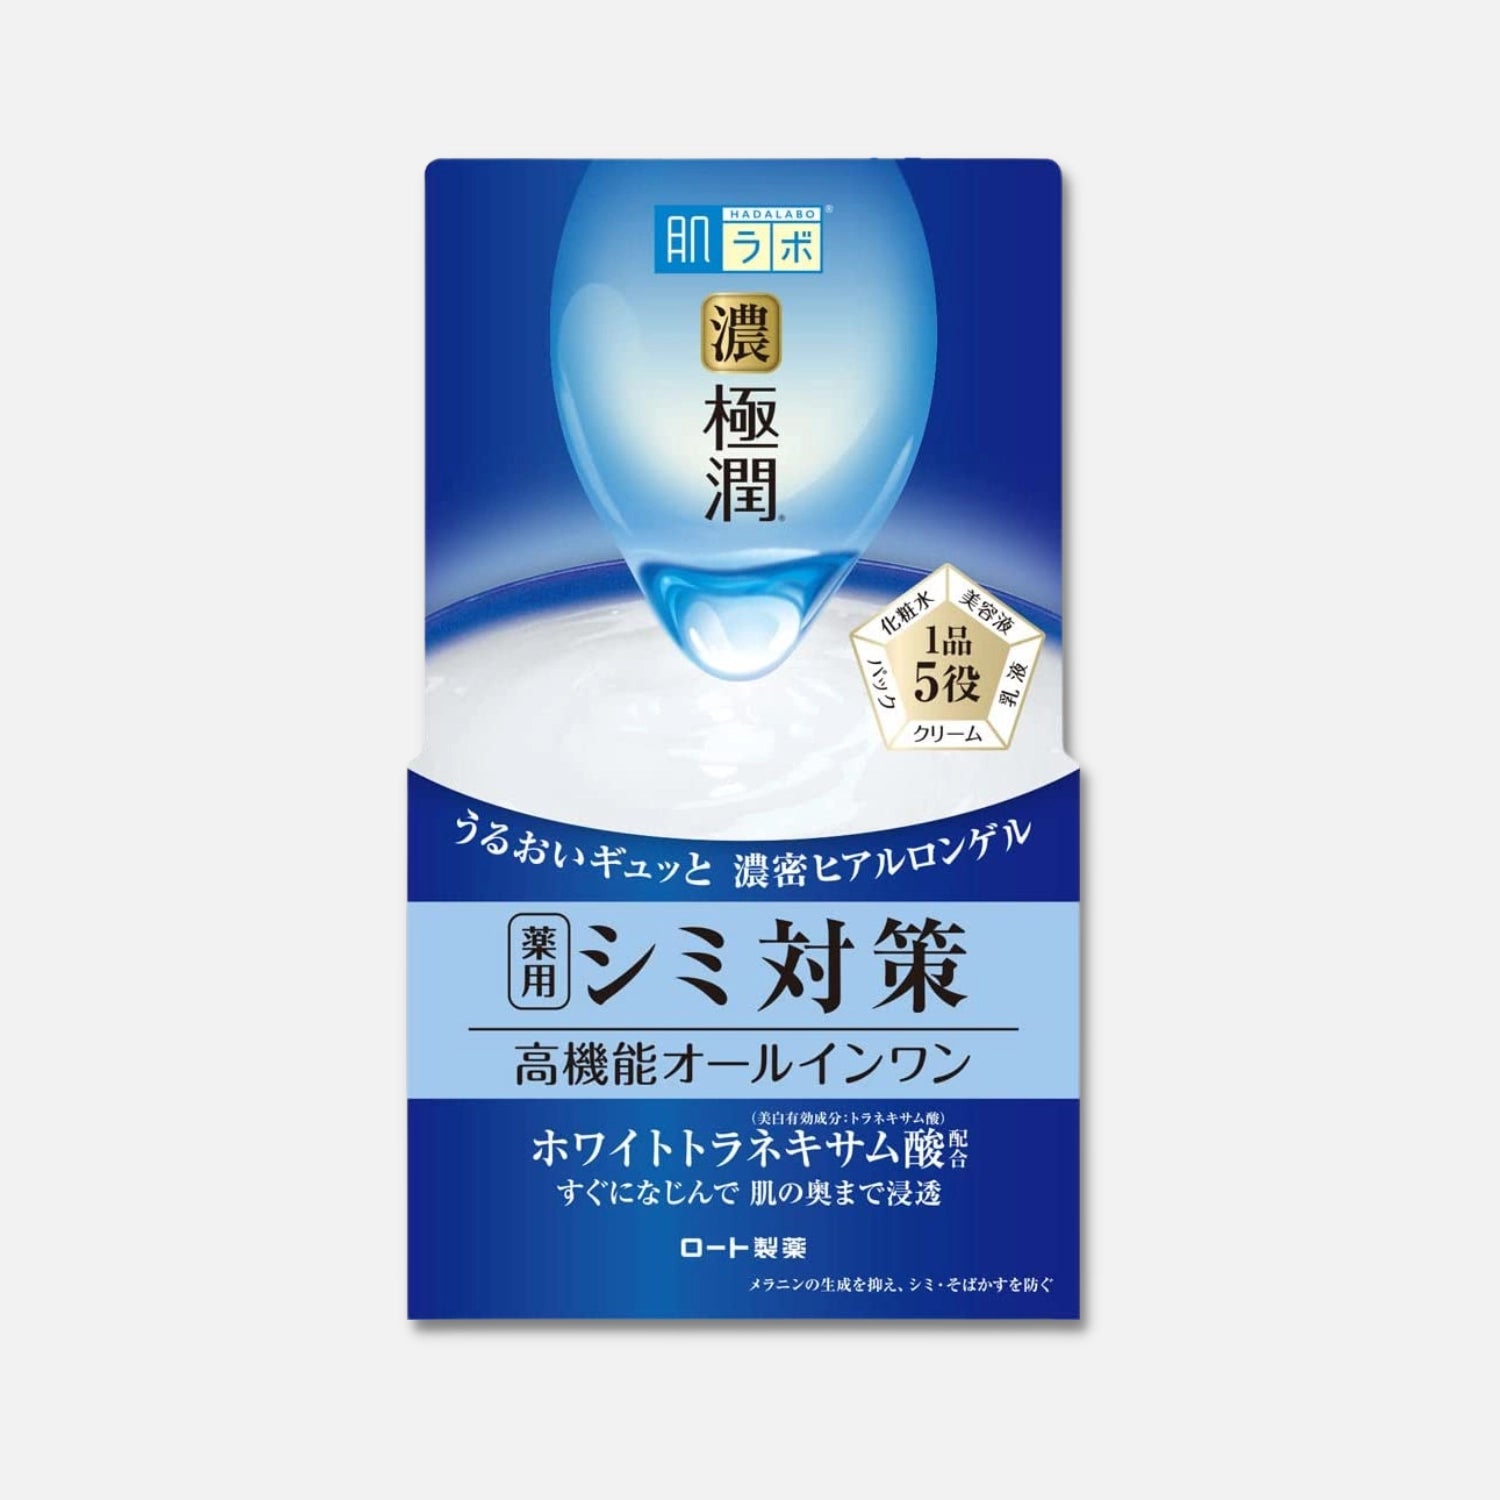 Hada Labo Premium Whitening Gel Cream 100g - Buy Me Japan